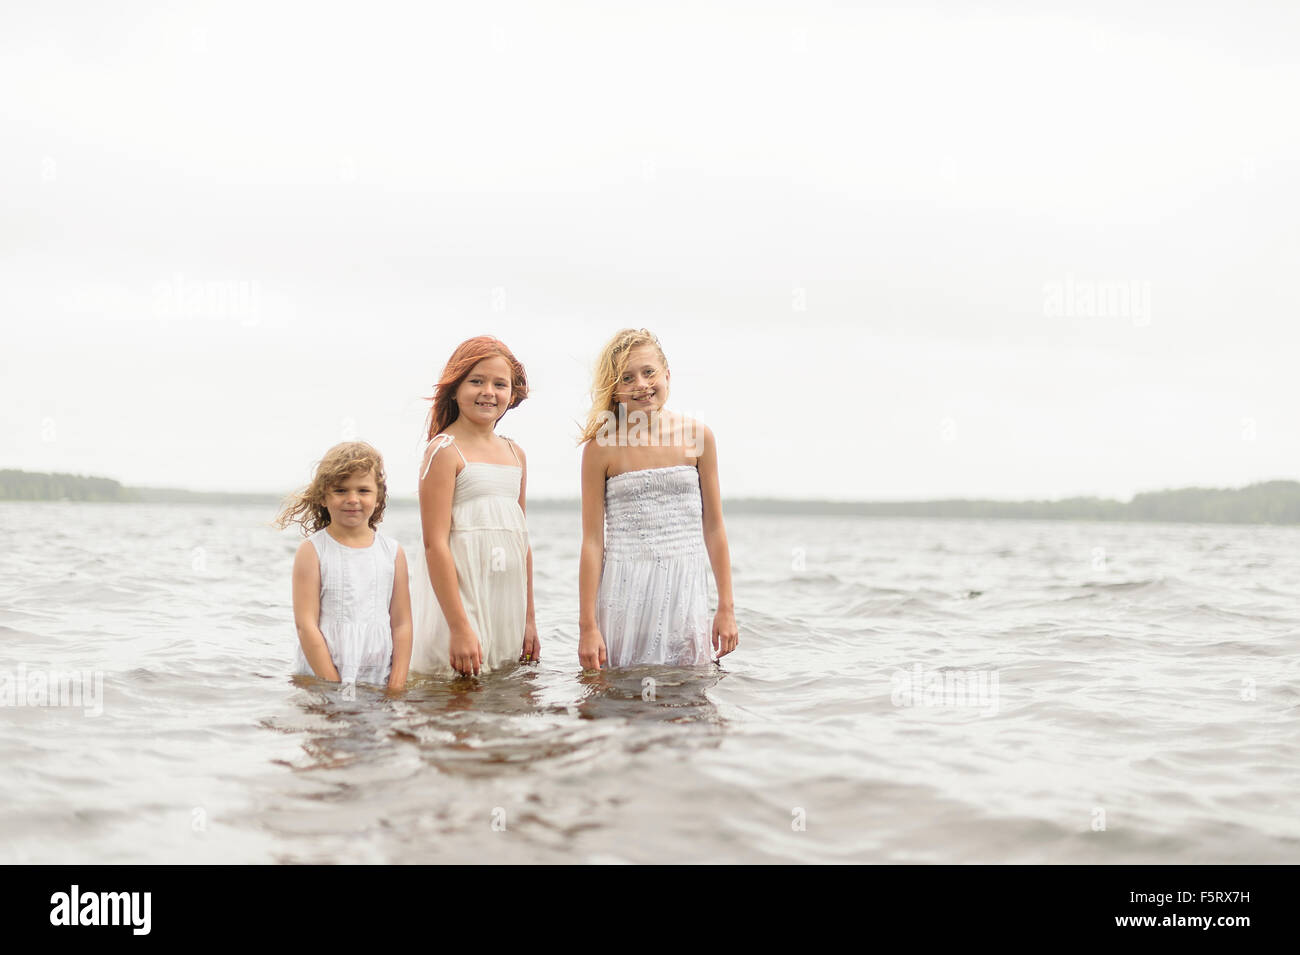 Sweden, Vastmanland, Bergslagen, Hallefors, Sangshyttan, Three girls (4-5, 8-9, 10-11) standing in water Stock Photo